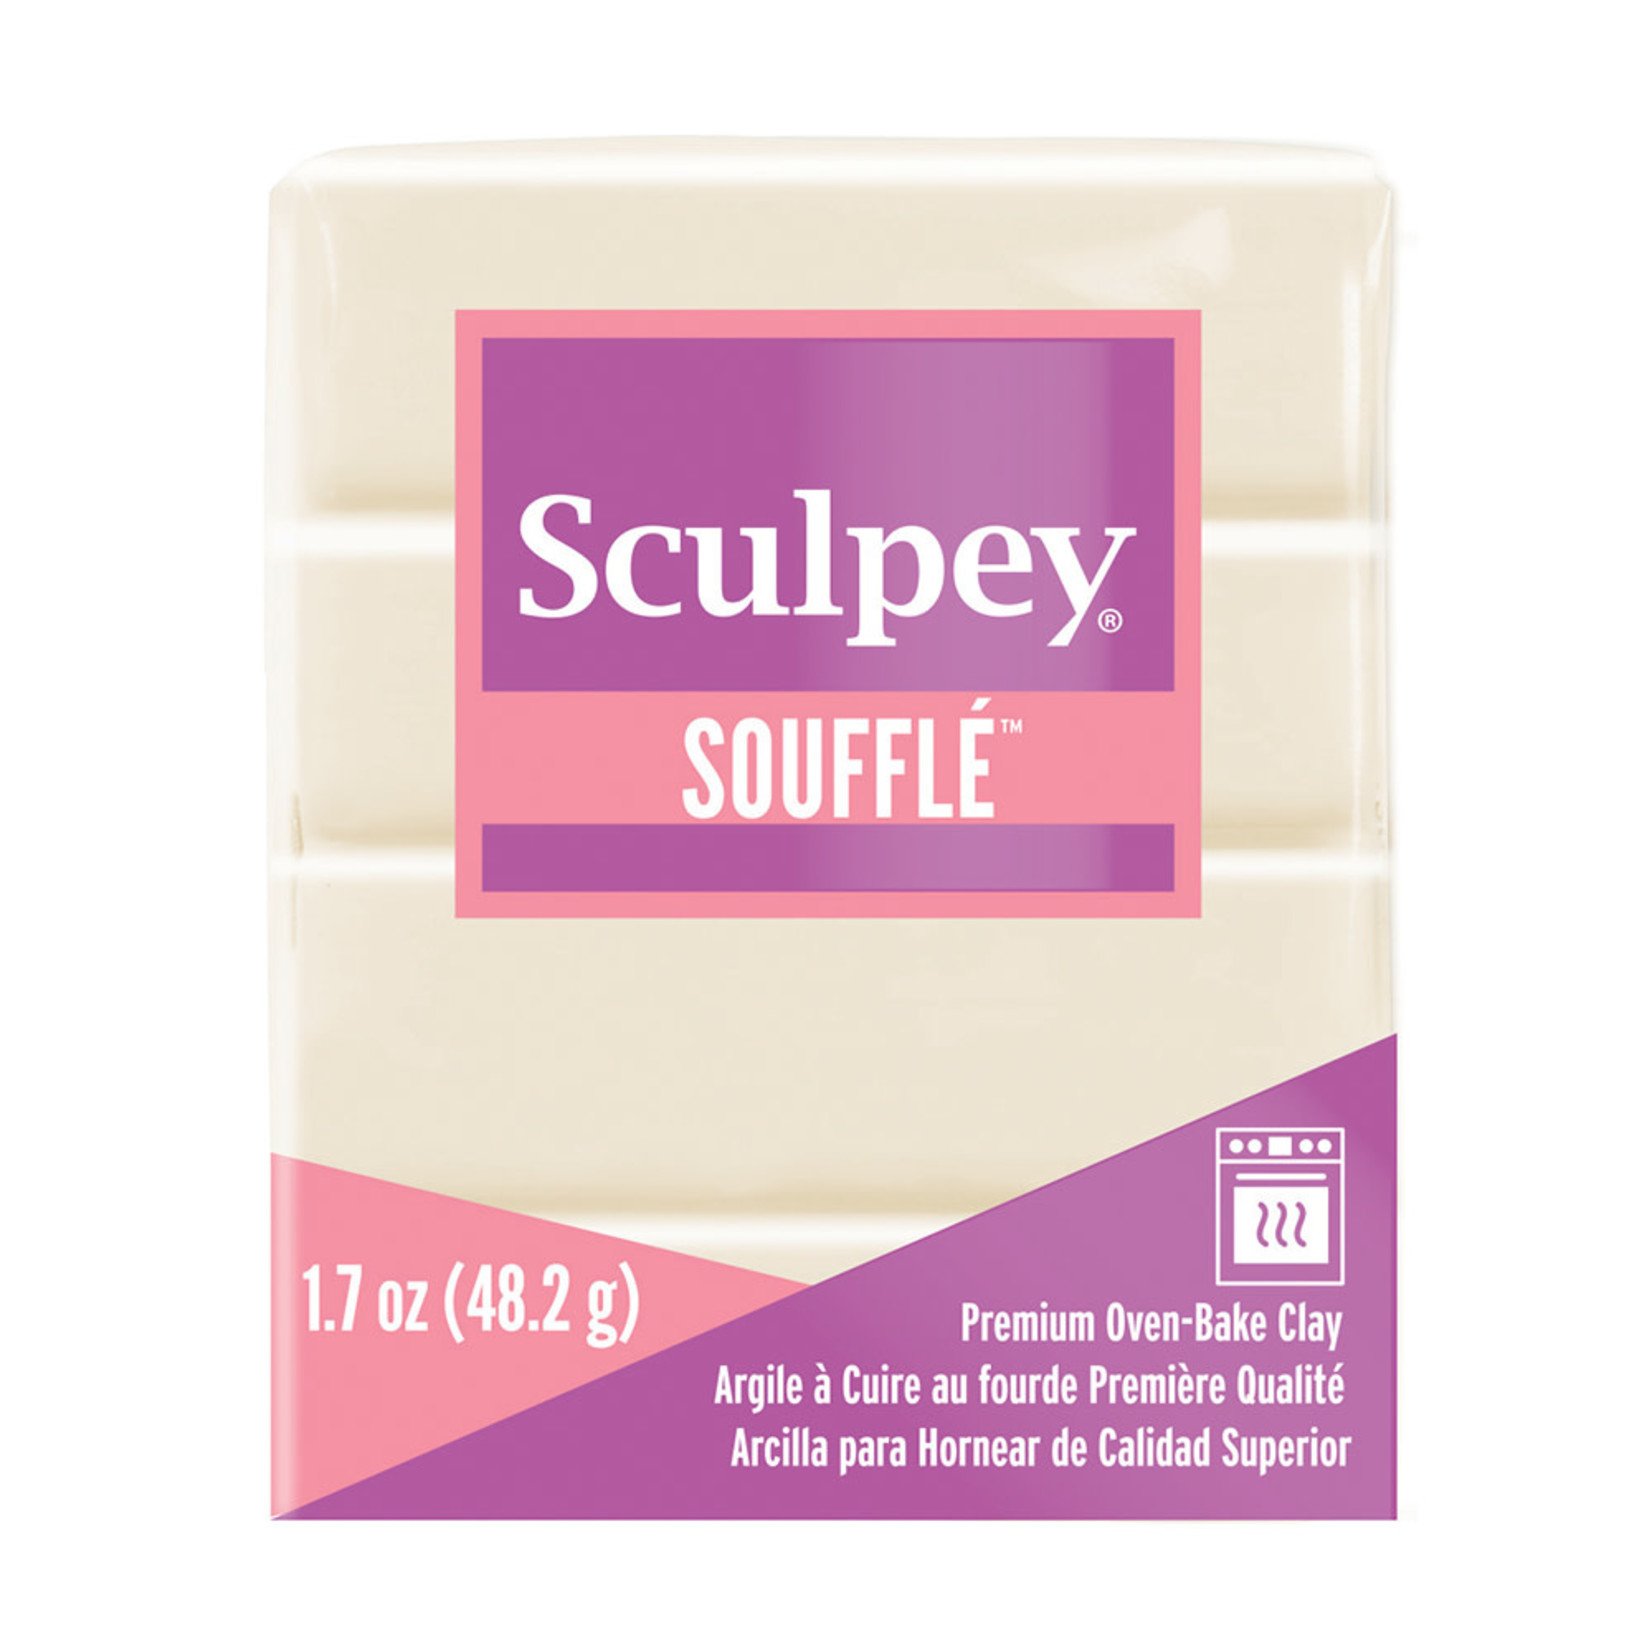 Sculpey Sculpey Souffle Ivory